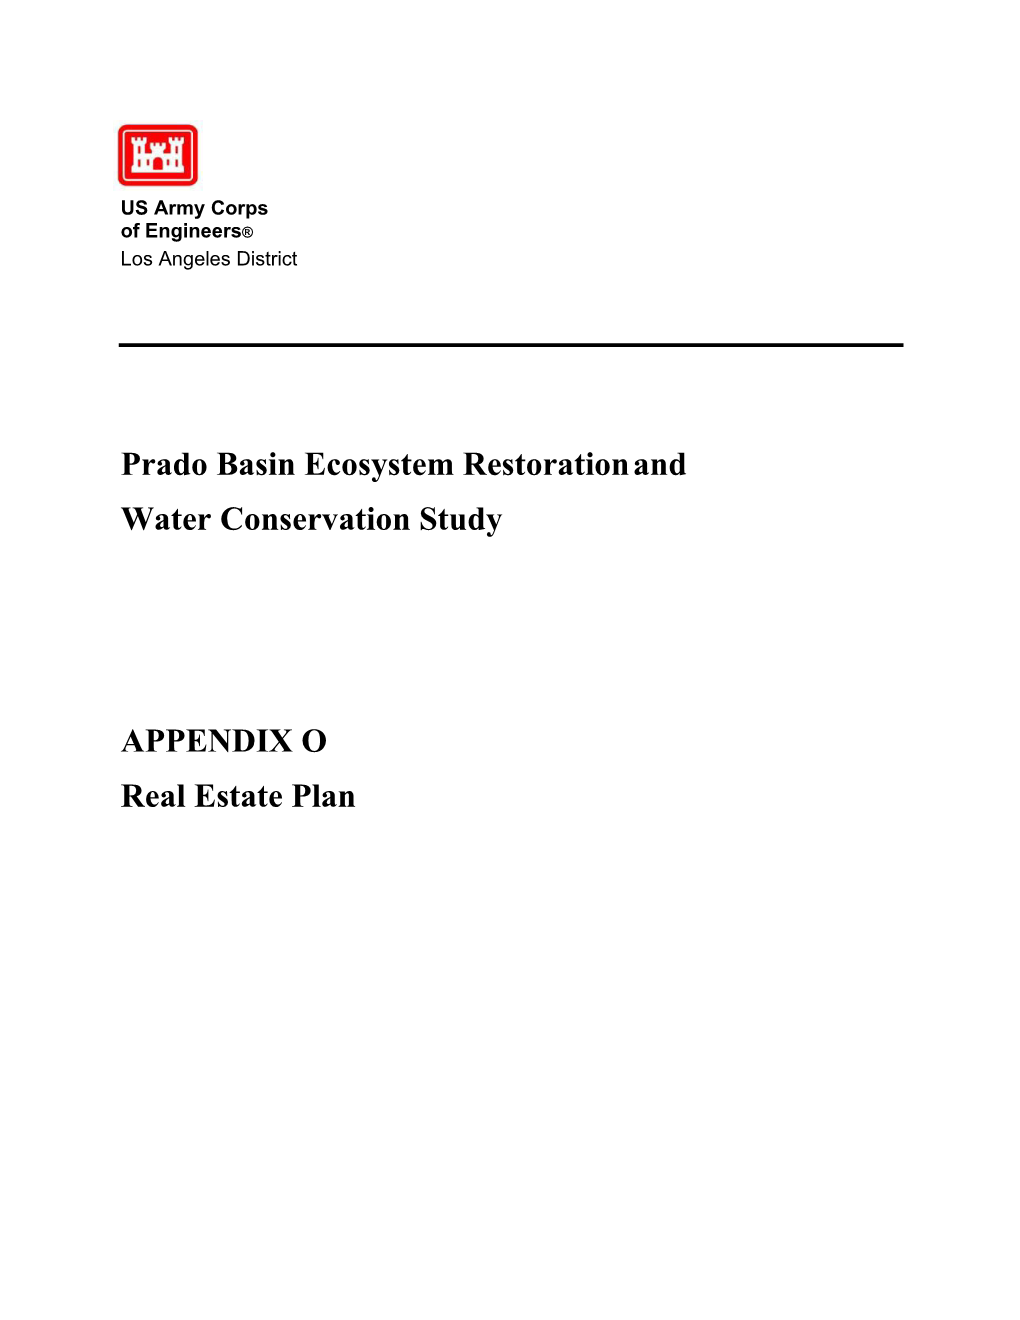 Prado Basin Ecosystem Restoration and Water Conservation Study